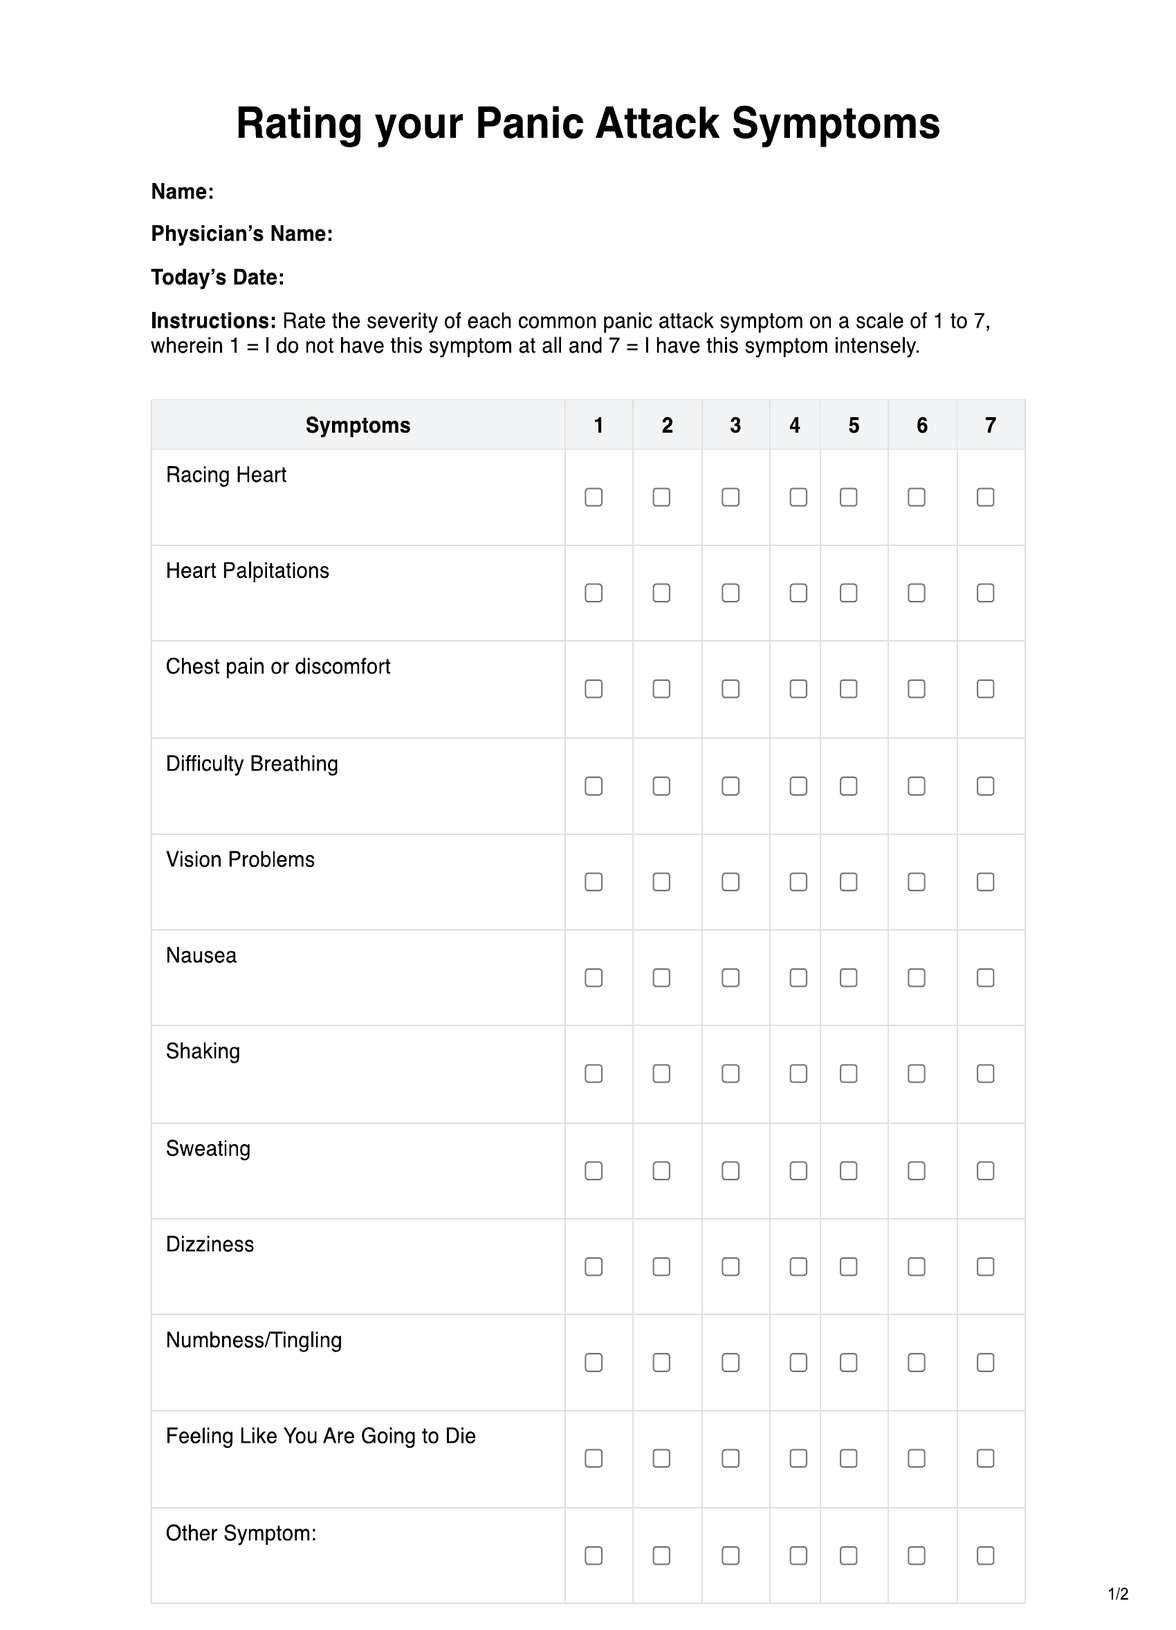 Rating Your Panic Attack Symptoms Worksheet PDF Example